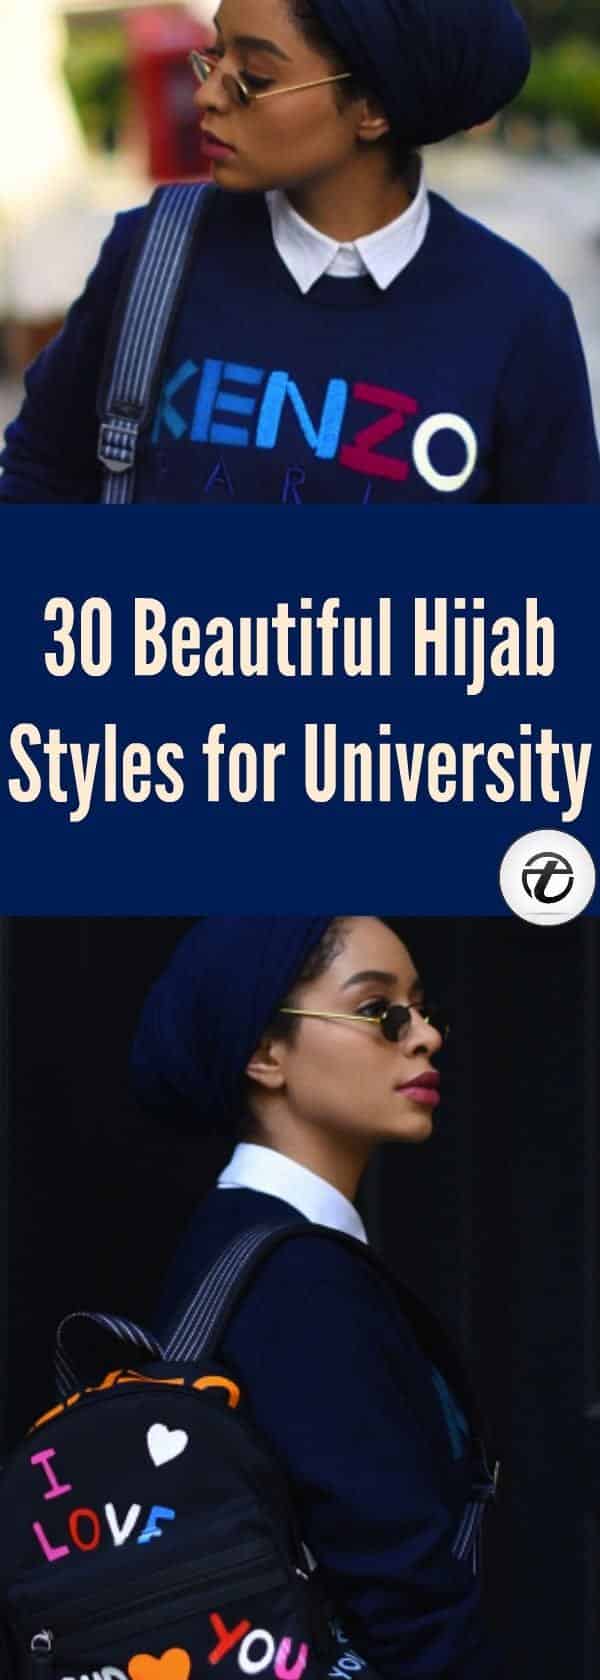 how to wear hijab to university